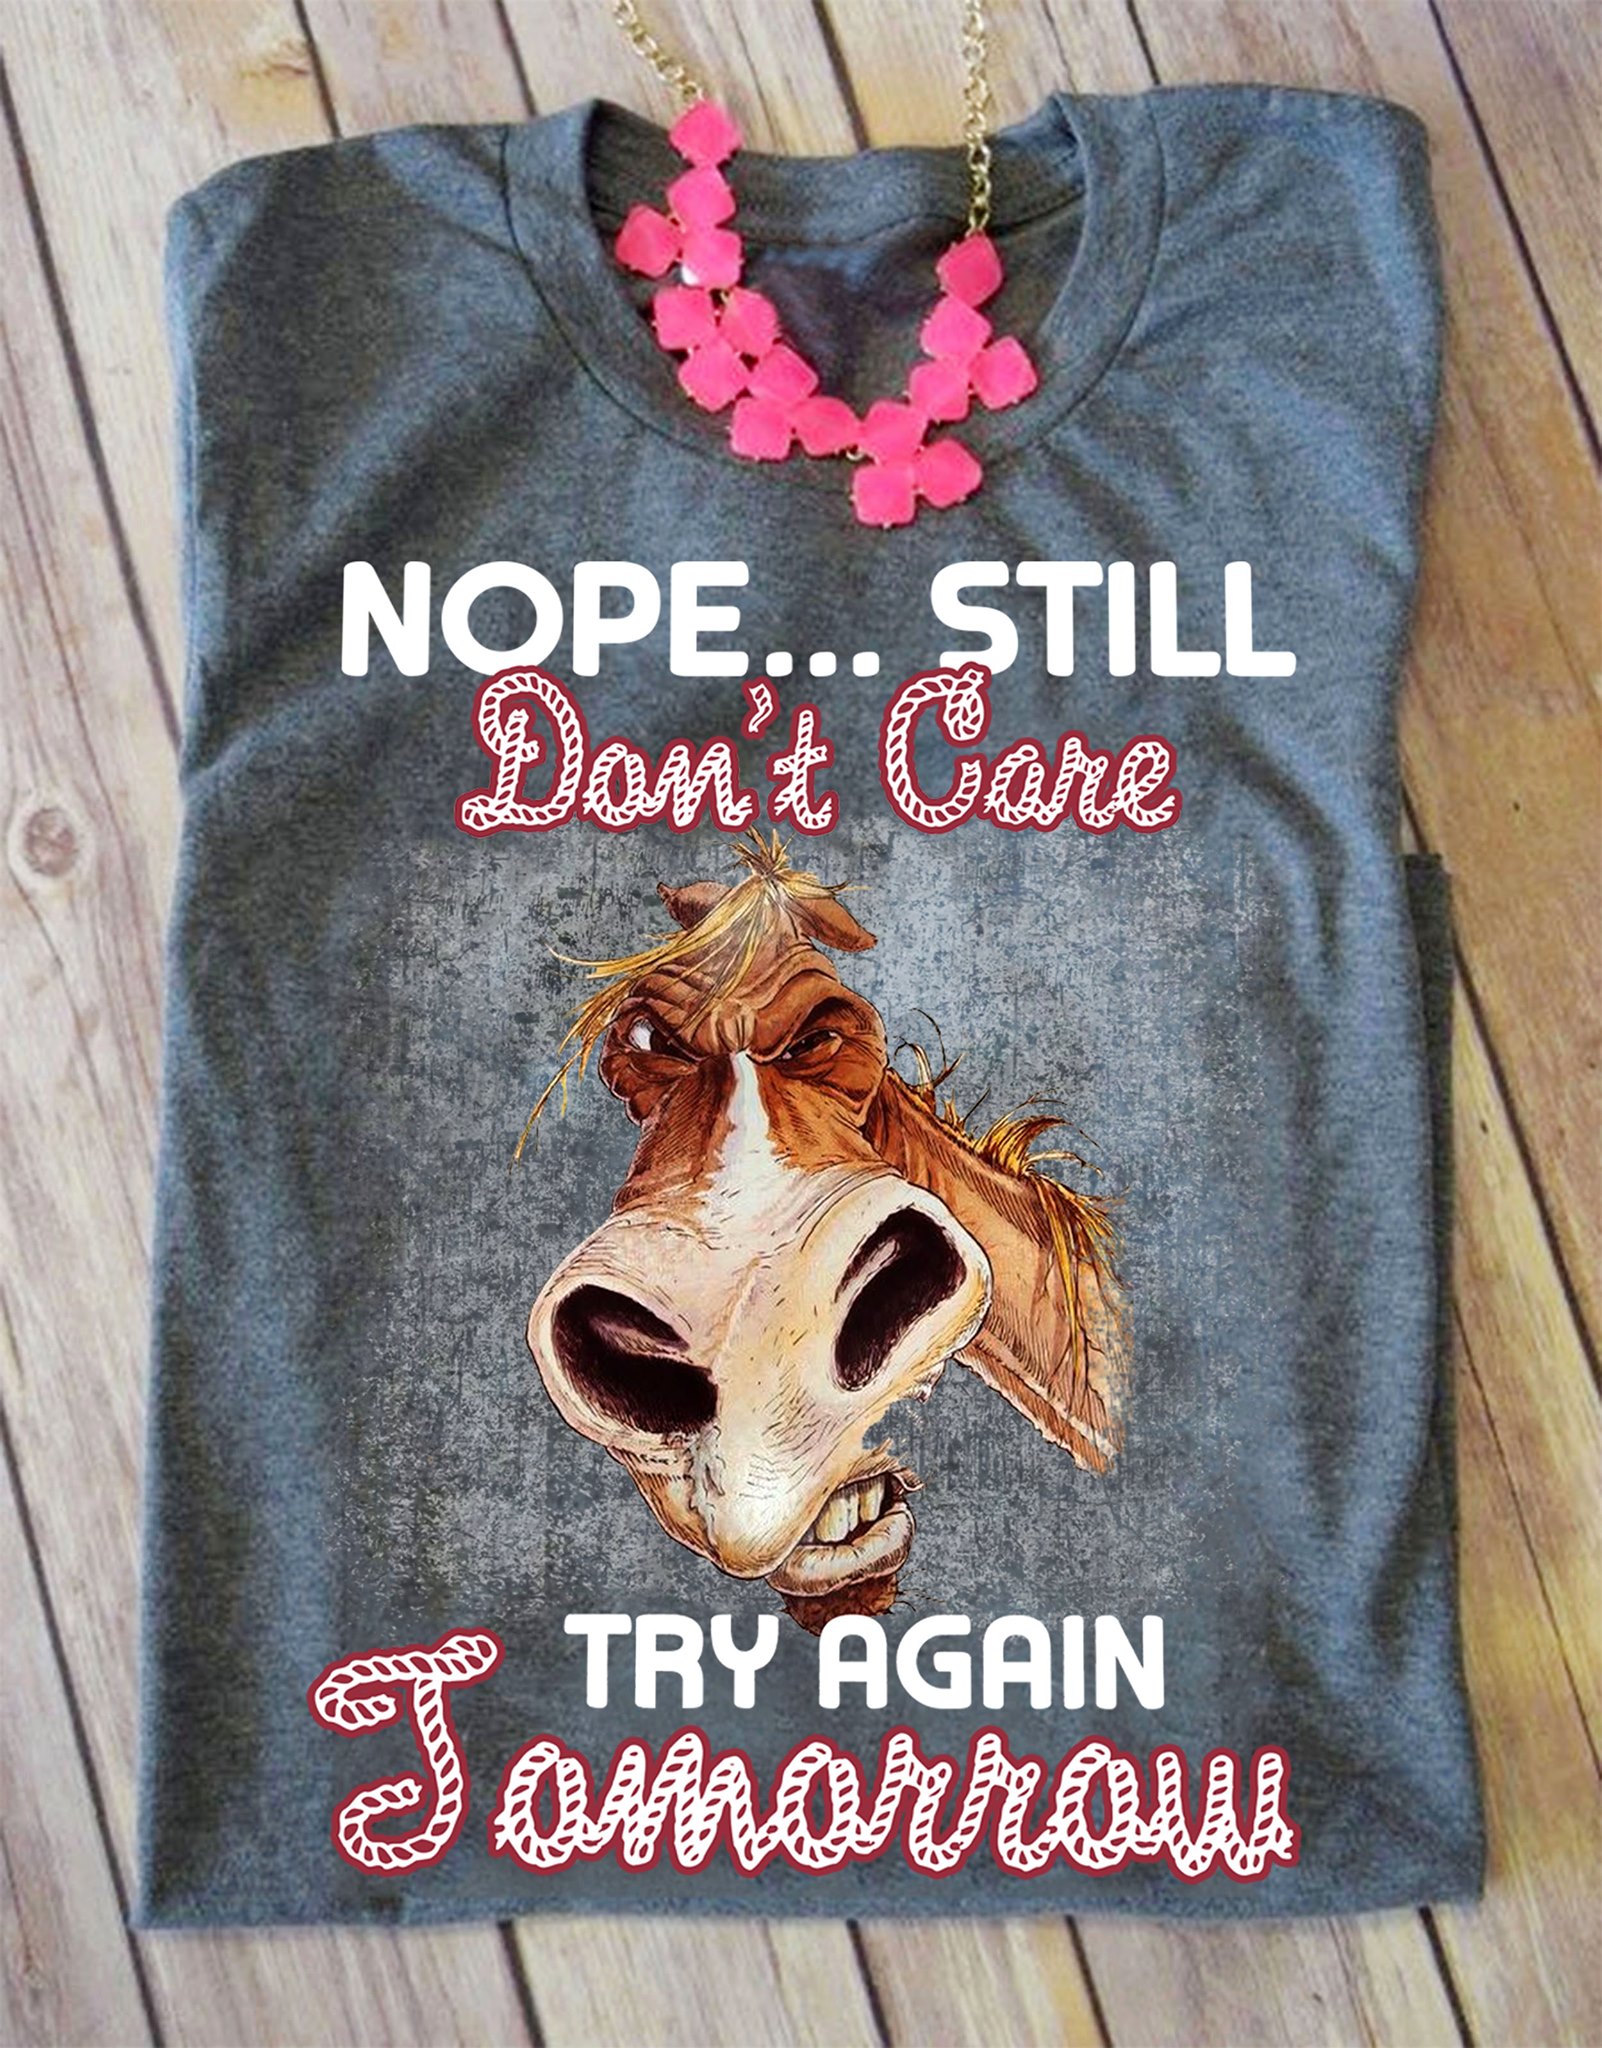 Nope still don't care try again tomorrow - Grumpy giraffe